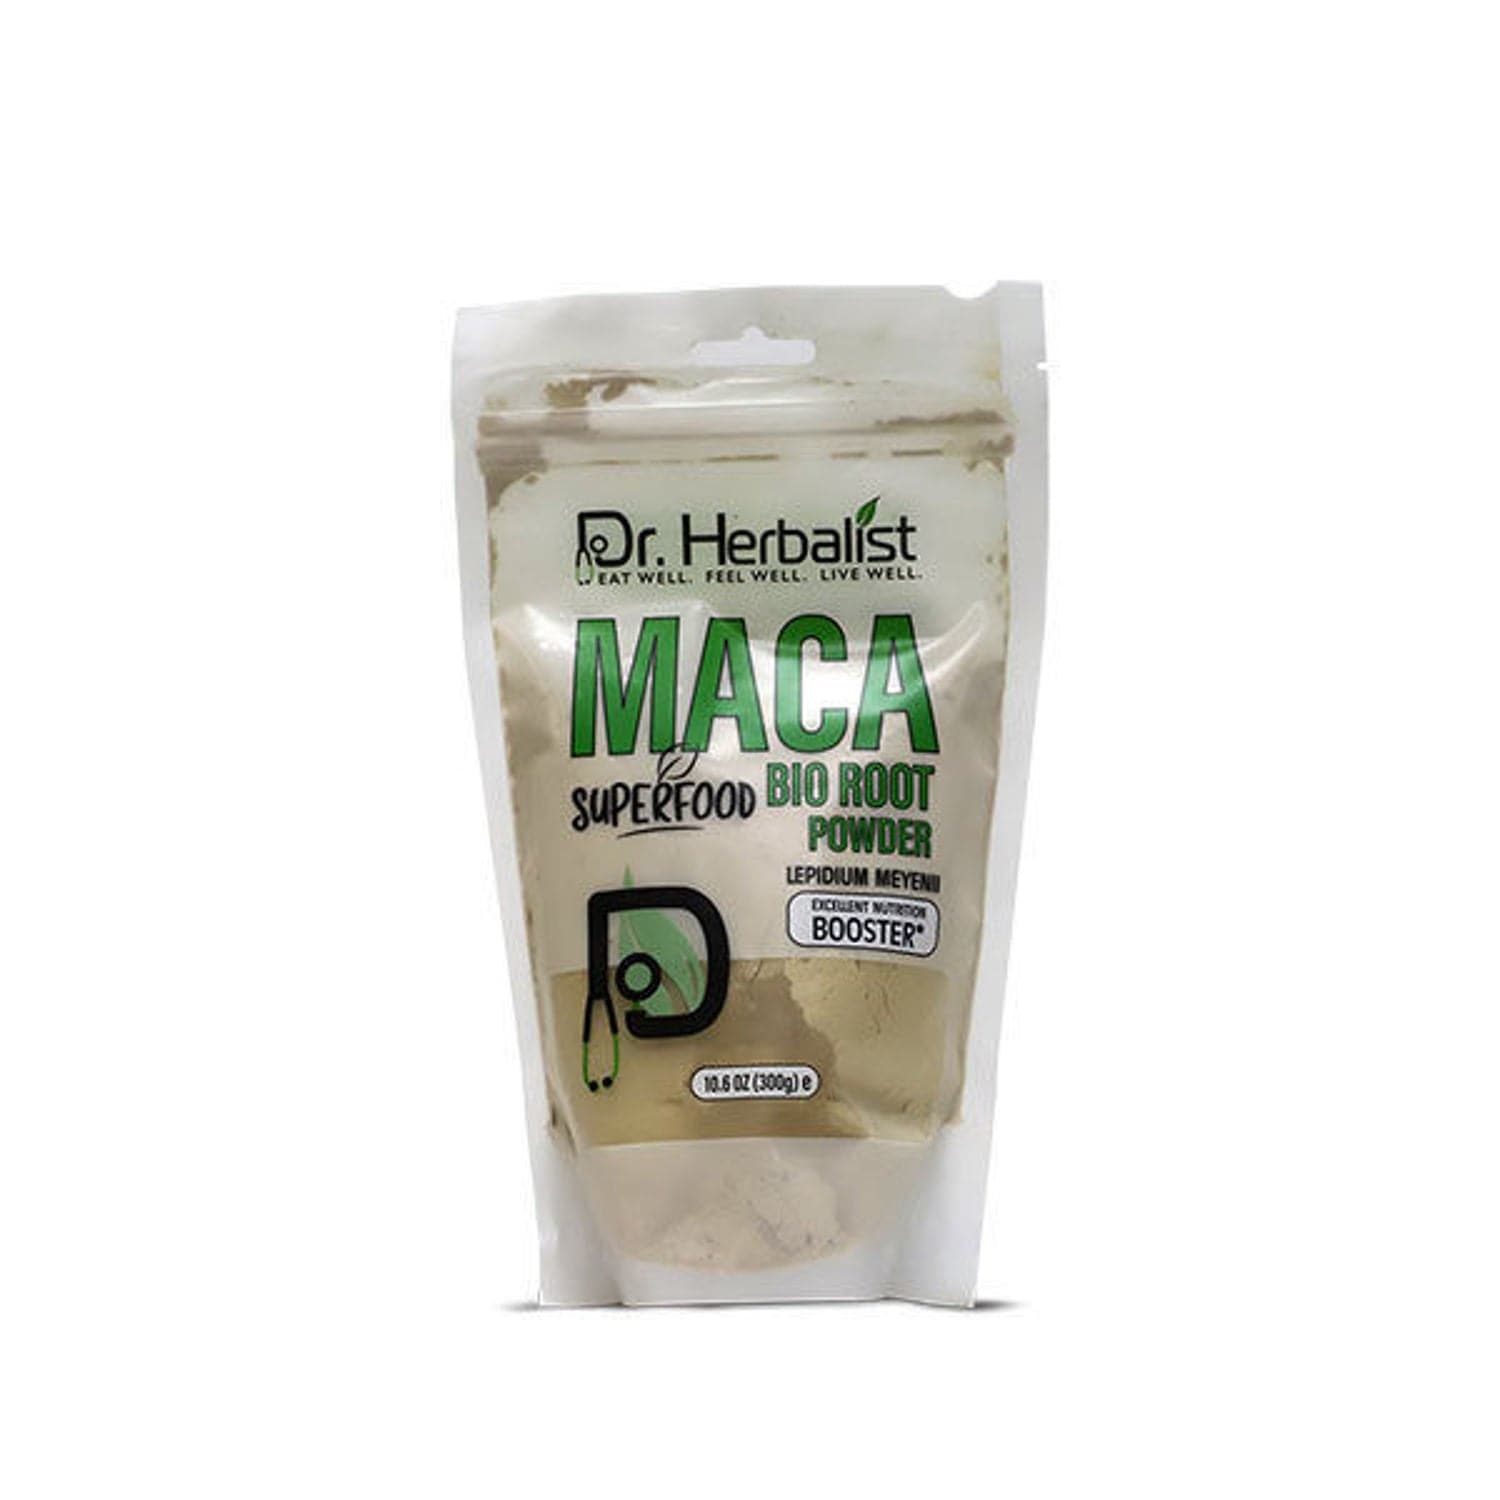 Dr. Herbalist Maca Superfood Bio Root Powder 300Gm - Premium Powder from Hemani - Just Rs 1800! Shop now at Cozmetica